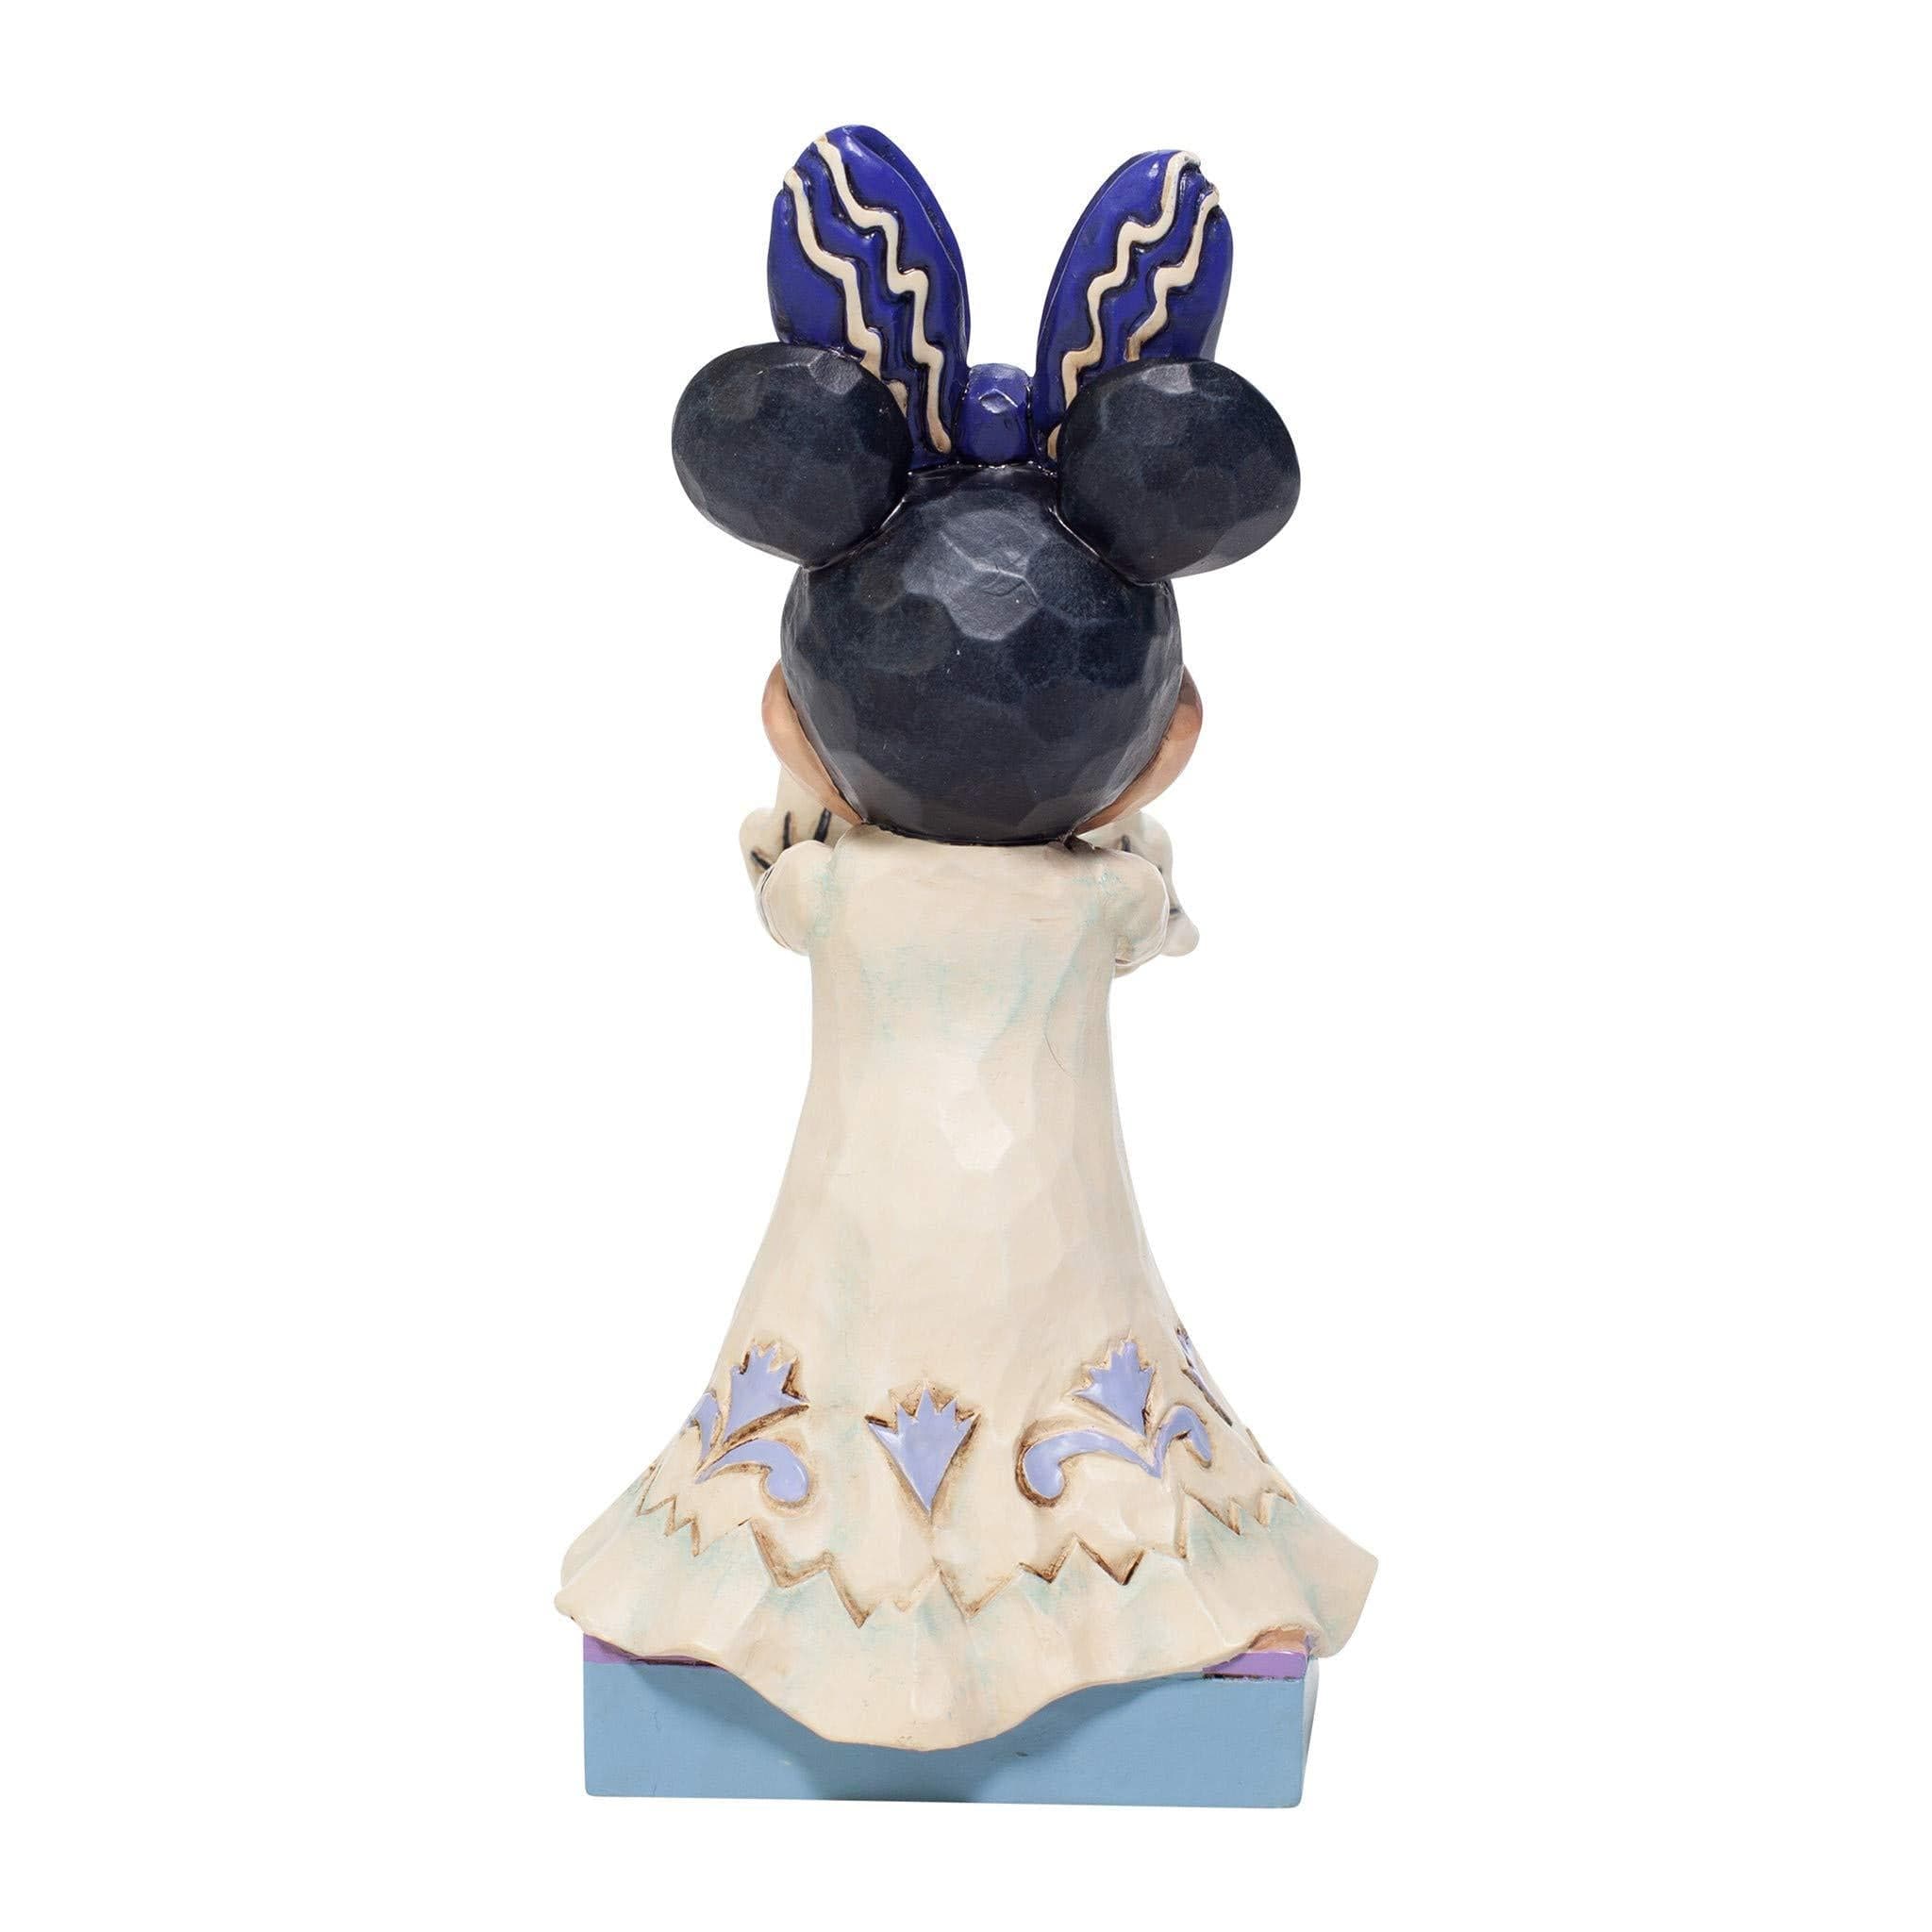 Enesco Disney Ornament Disney Traditions Figurine - Scream Queen (Halloween Minnie Mouse)